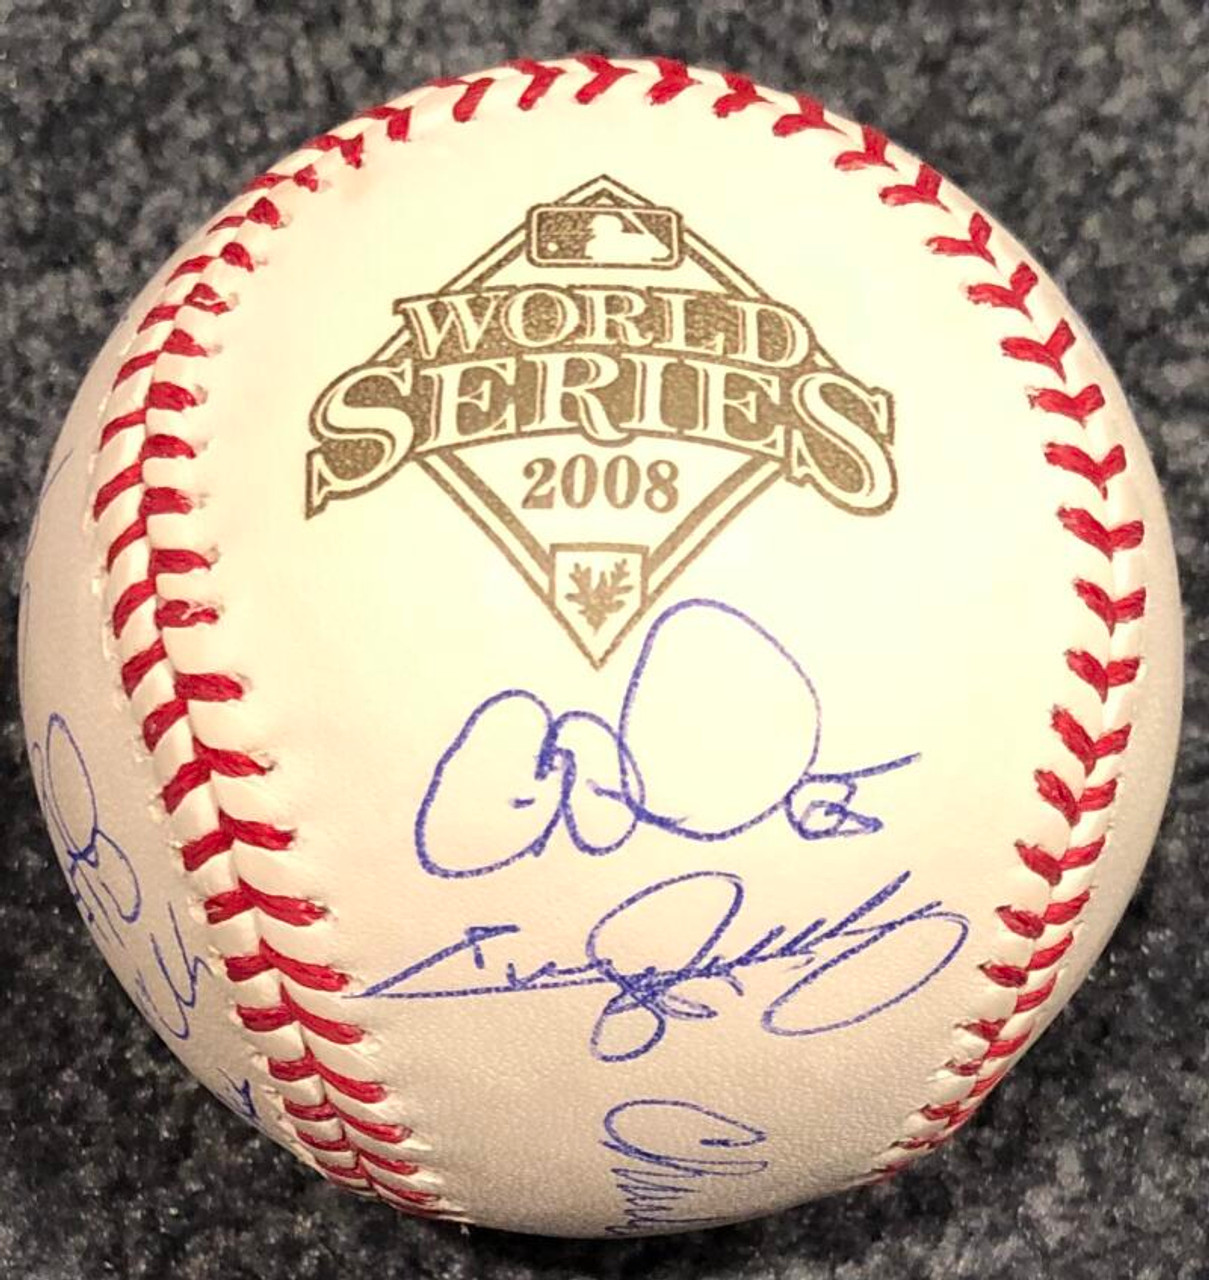 Scott Eyre Signed 8×10 Photo – Phillies 2008 World Series Champions